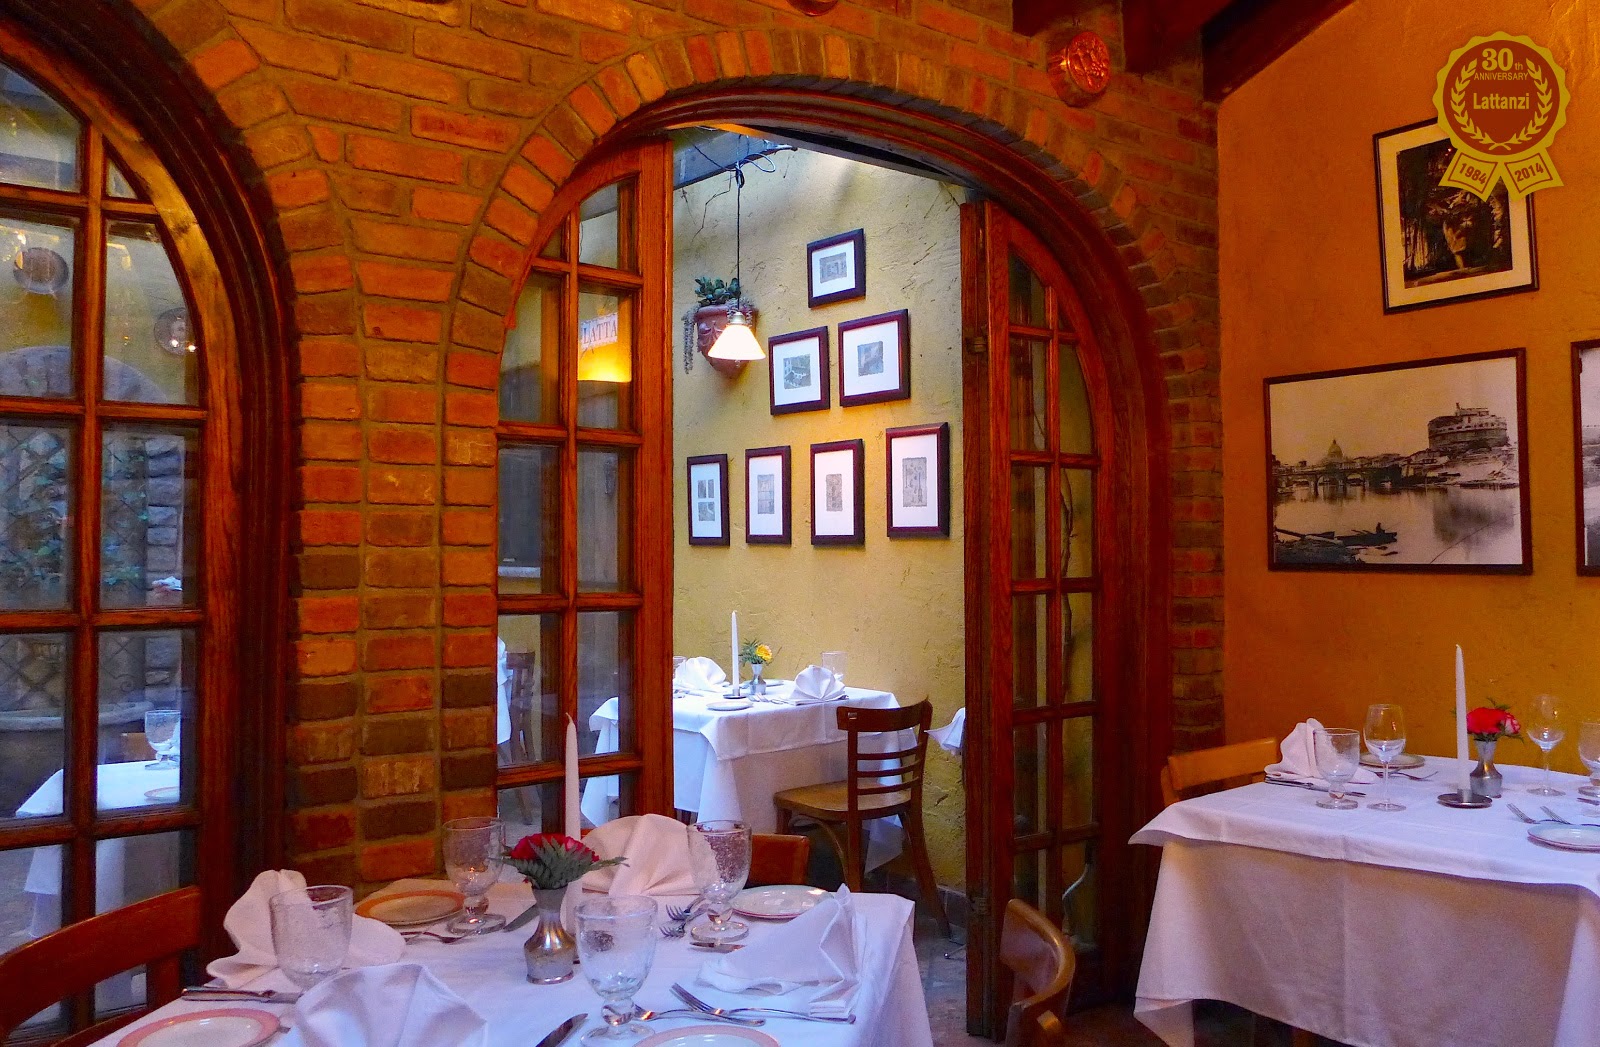 Photo of Lattanzi in New York City, New York, United States - 2 Picture of Restaurant, Food, Point of interest, Establishment, Bar